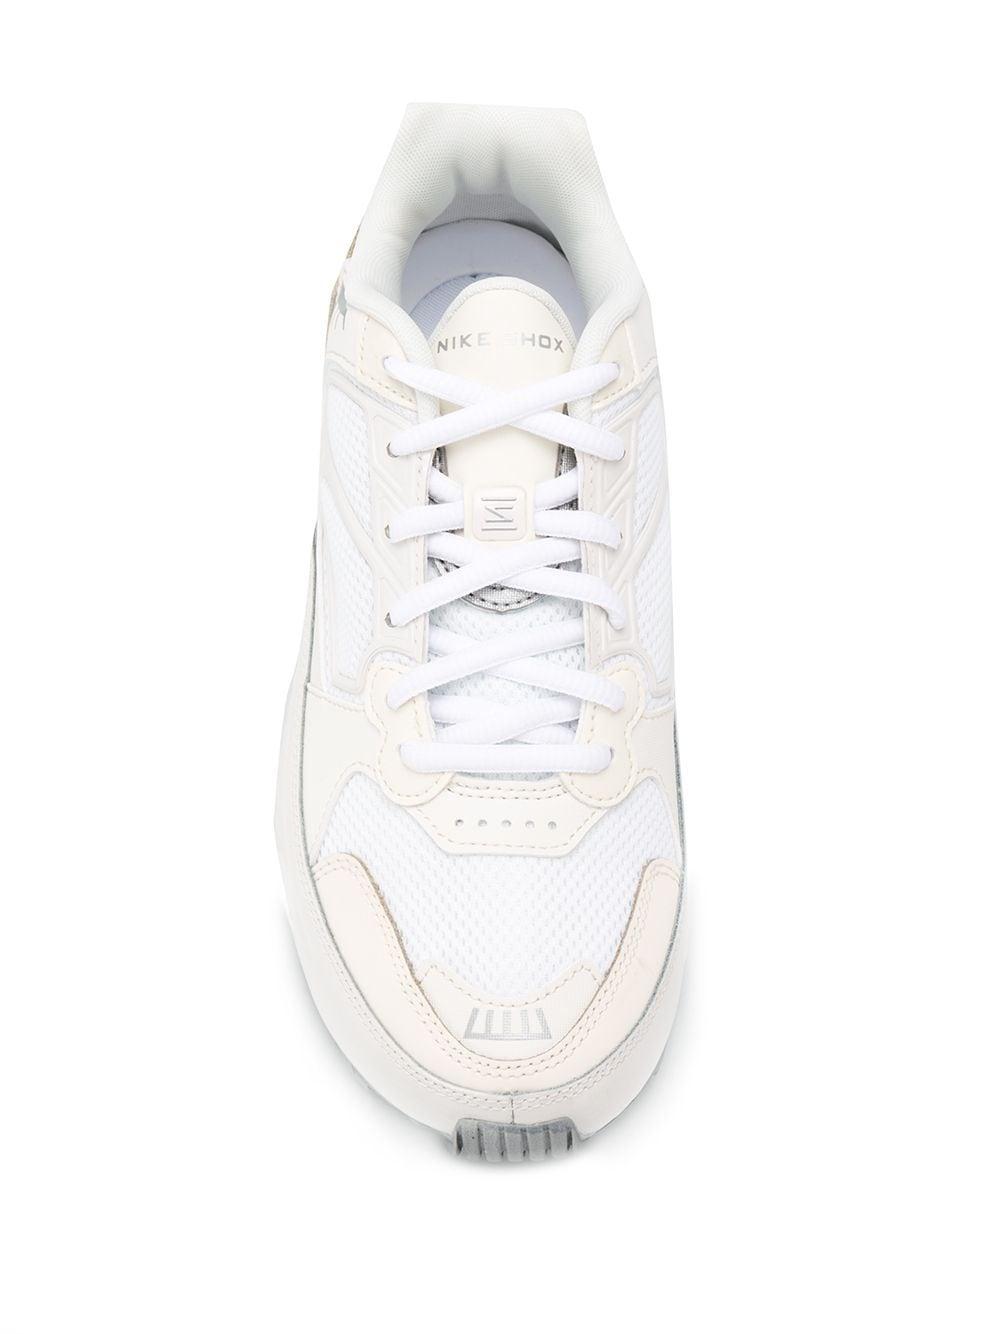 Nike Shox Enigma 9000 Sneakers in White | Lyst